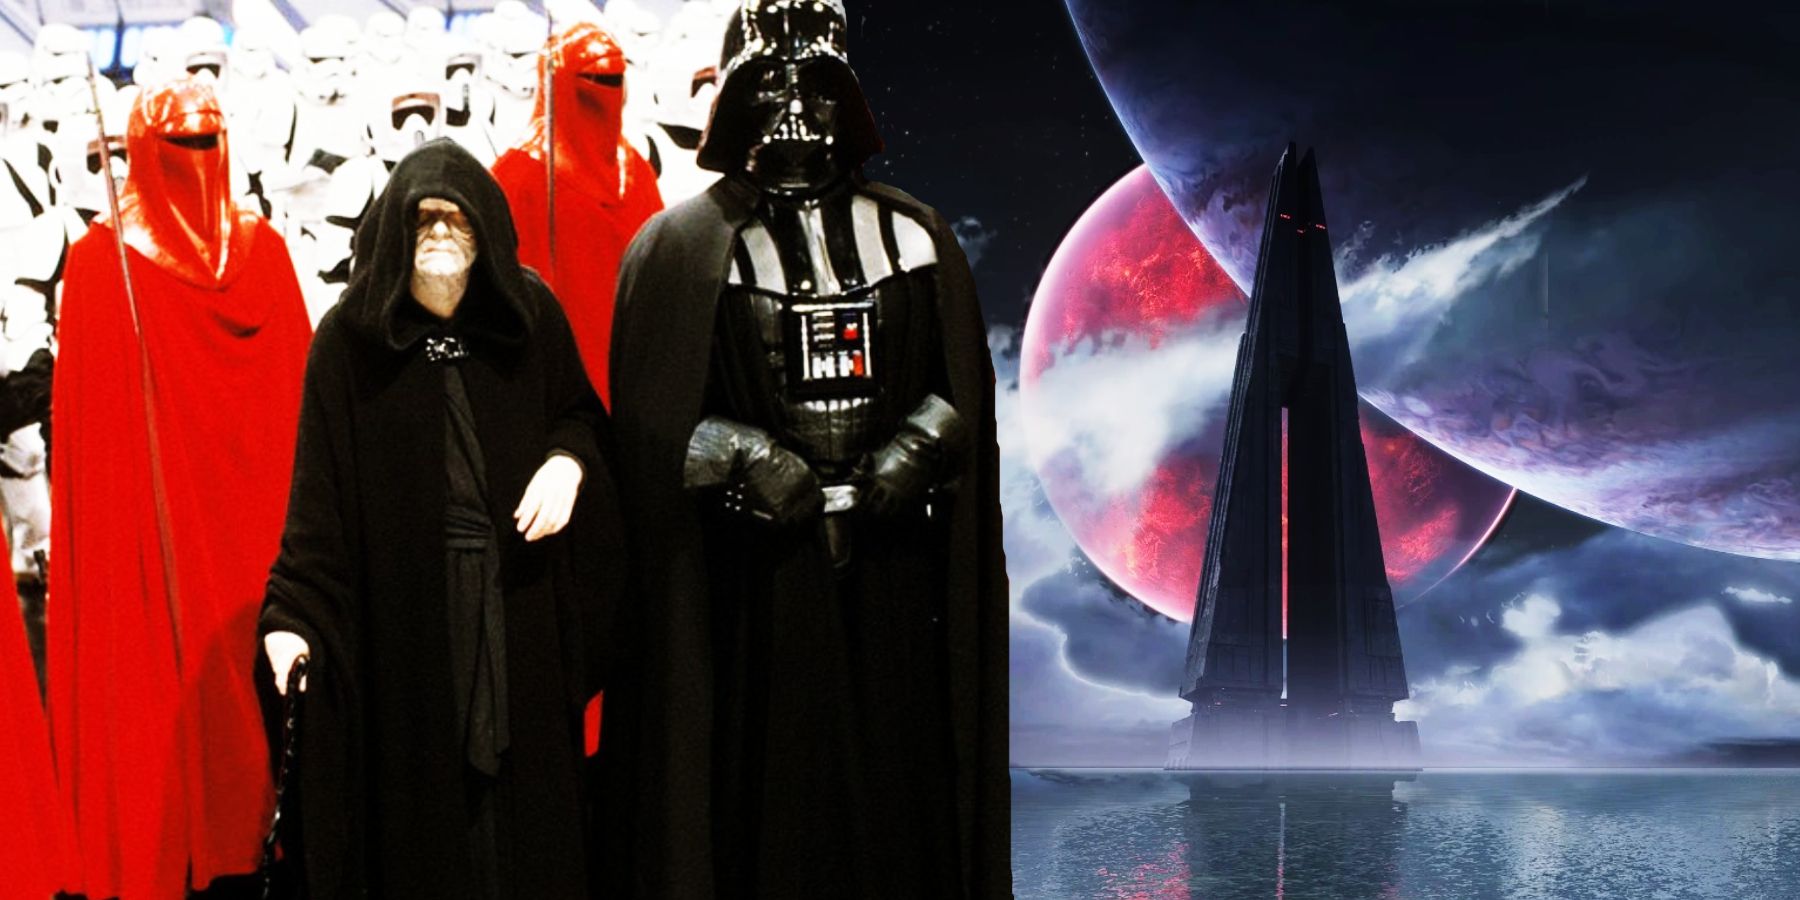 The Emperor, Darth Vader and Fortress Inquisitorius